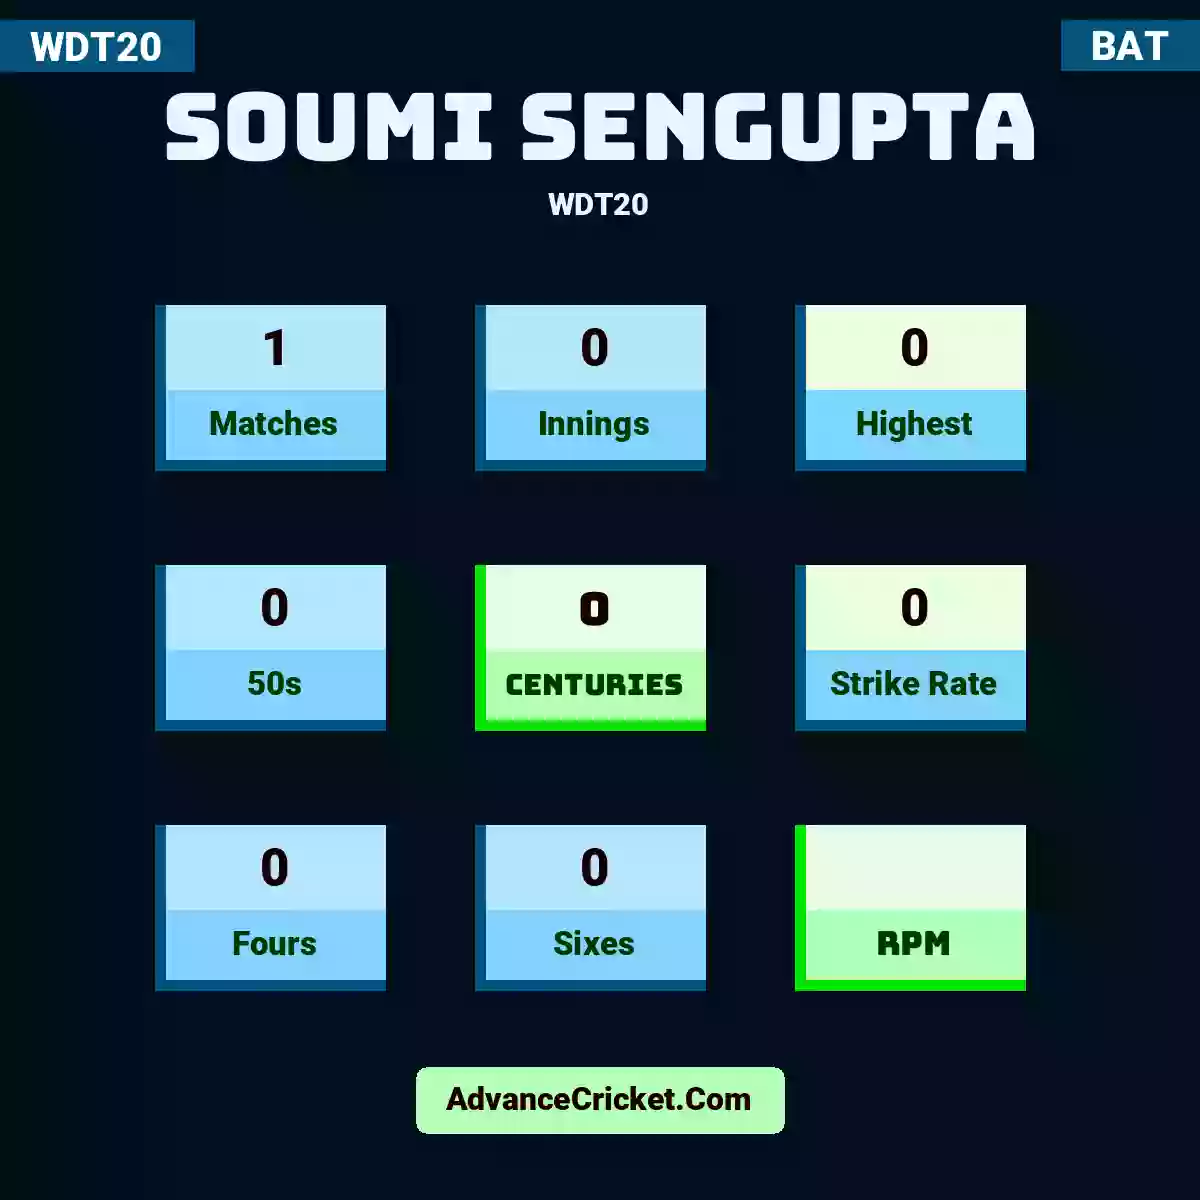 Soumi Sengupta WDT20 , Soumi Sengupta played 1 matches, scored 0 runs as highest, 0 half-centuries, and 0 centuries, with a strike rate of 0. S.Sengupta hit 0 fours and 0 sixes.